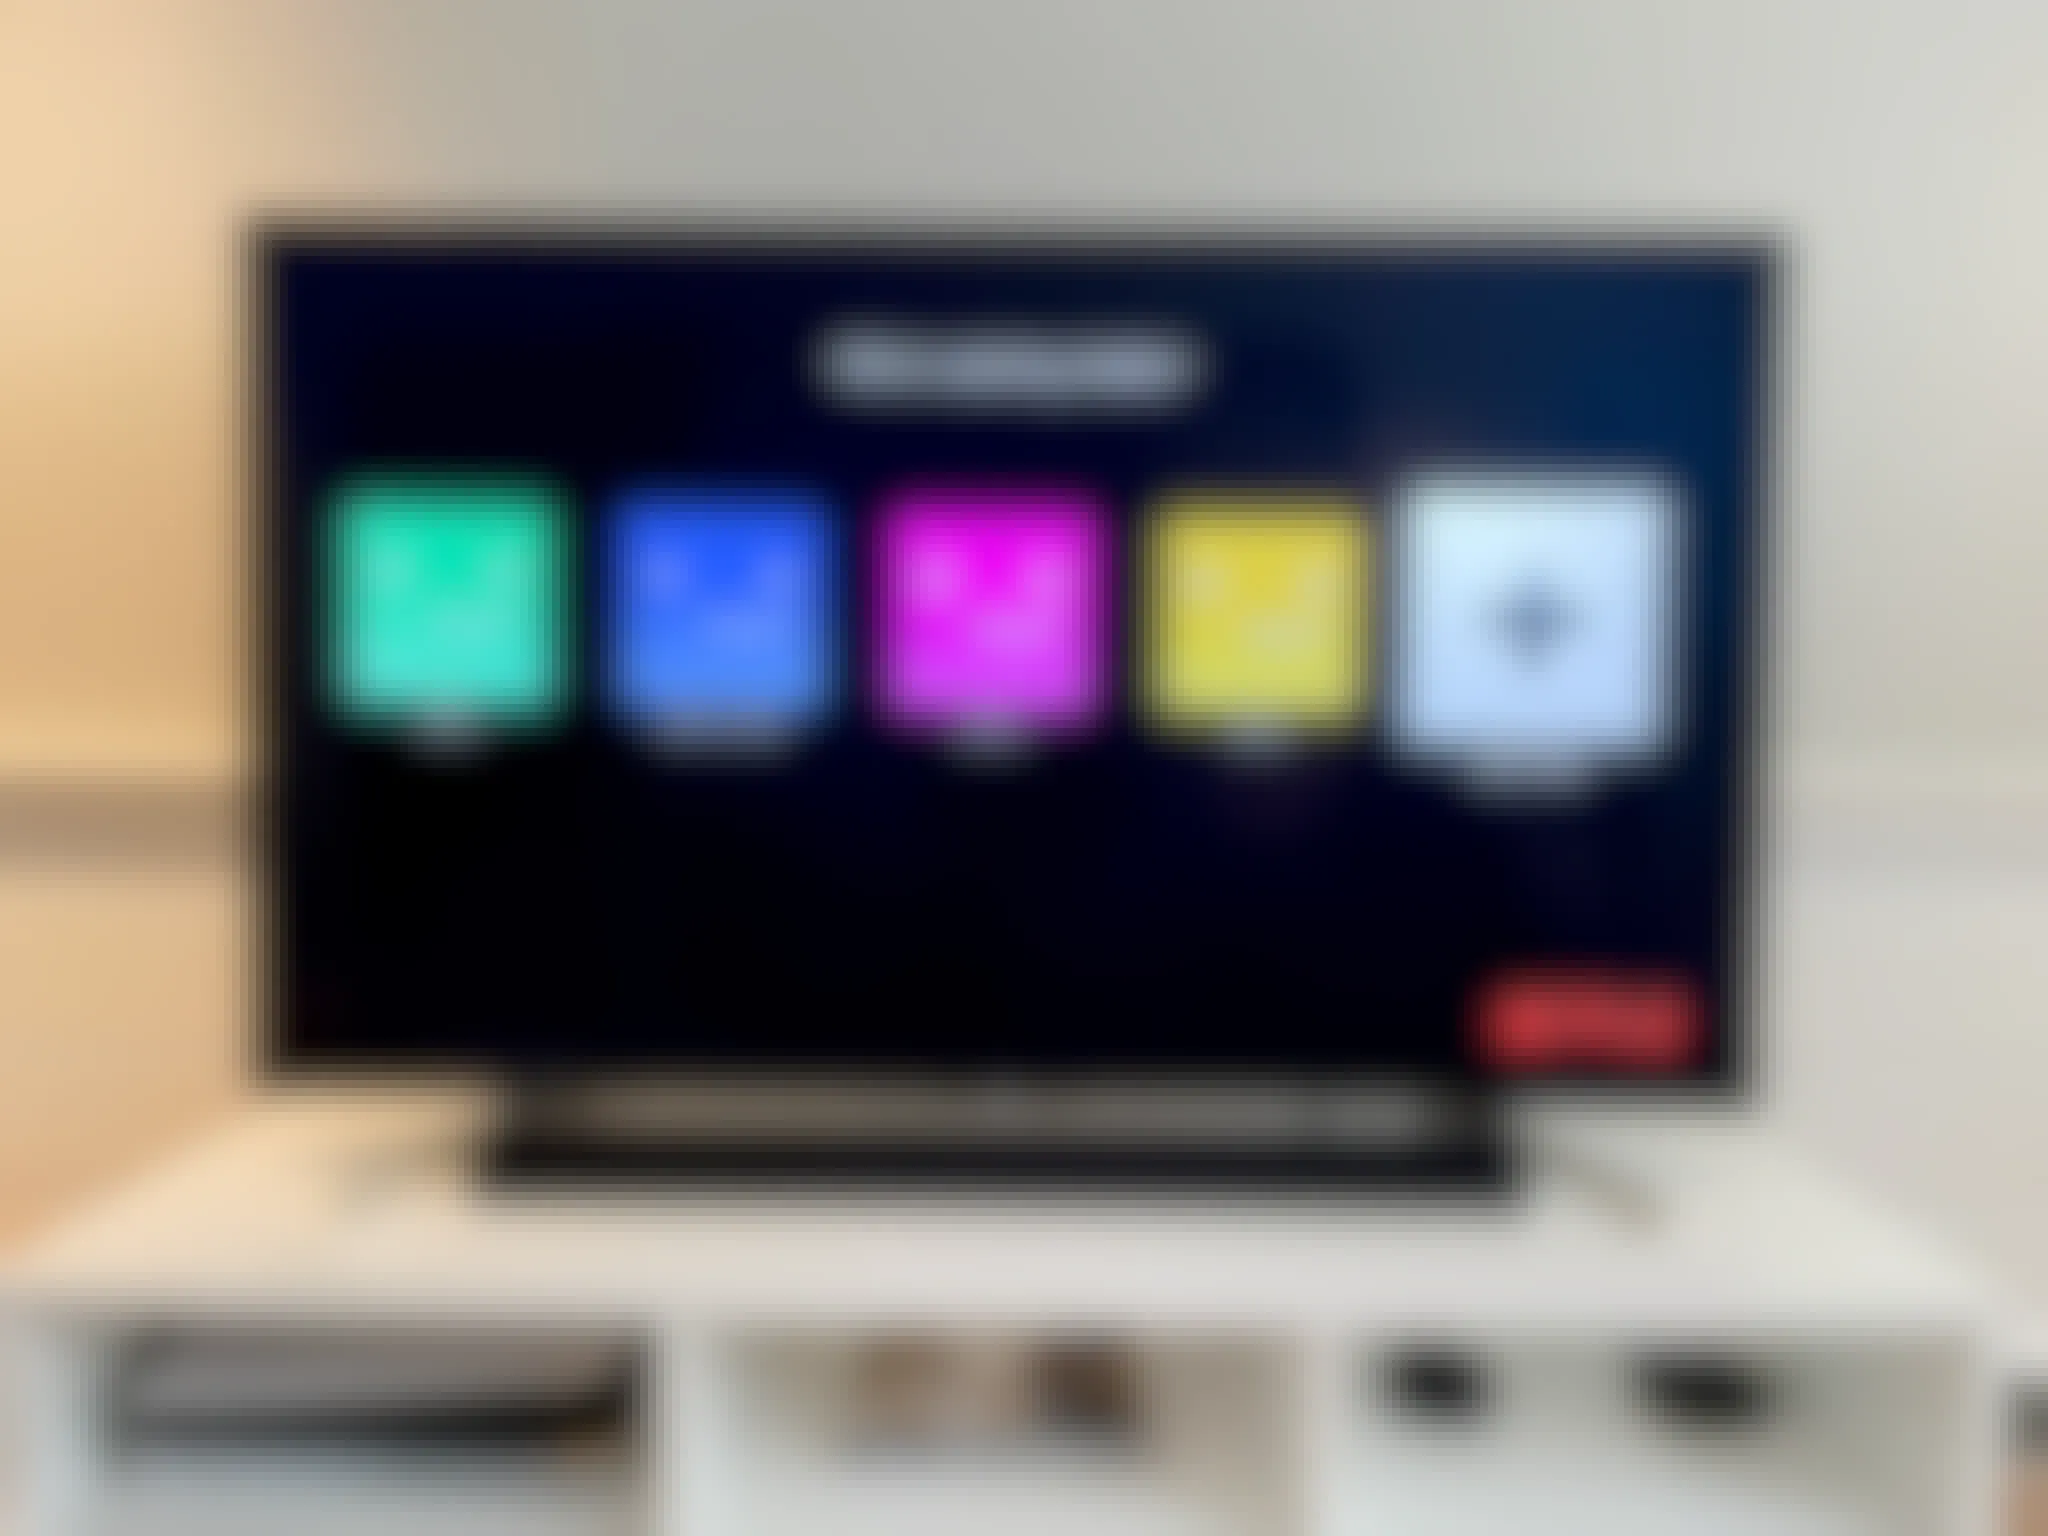 Tv showing the Netflix profiles screen asking who's watching Netflix